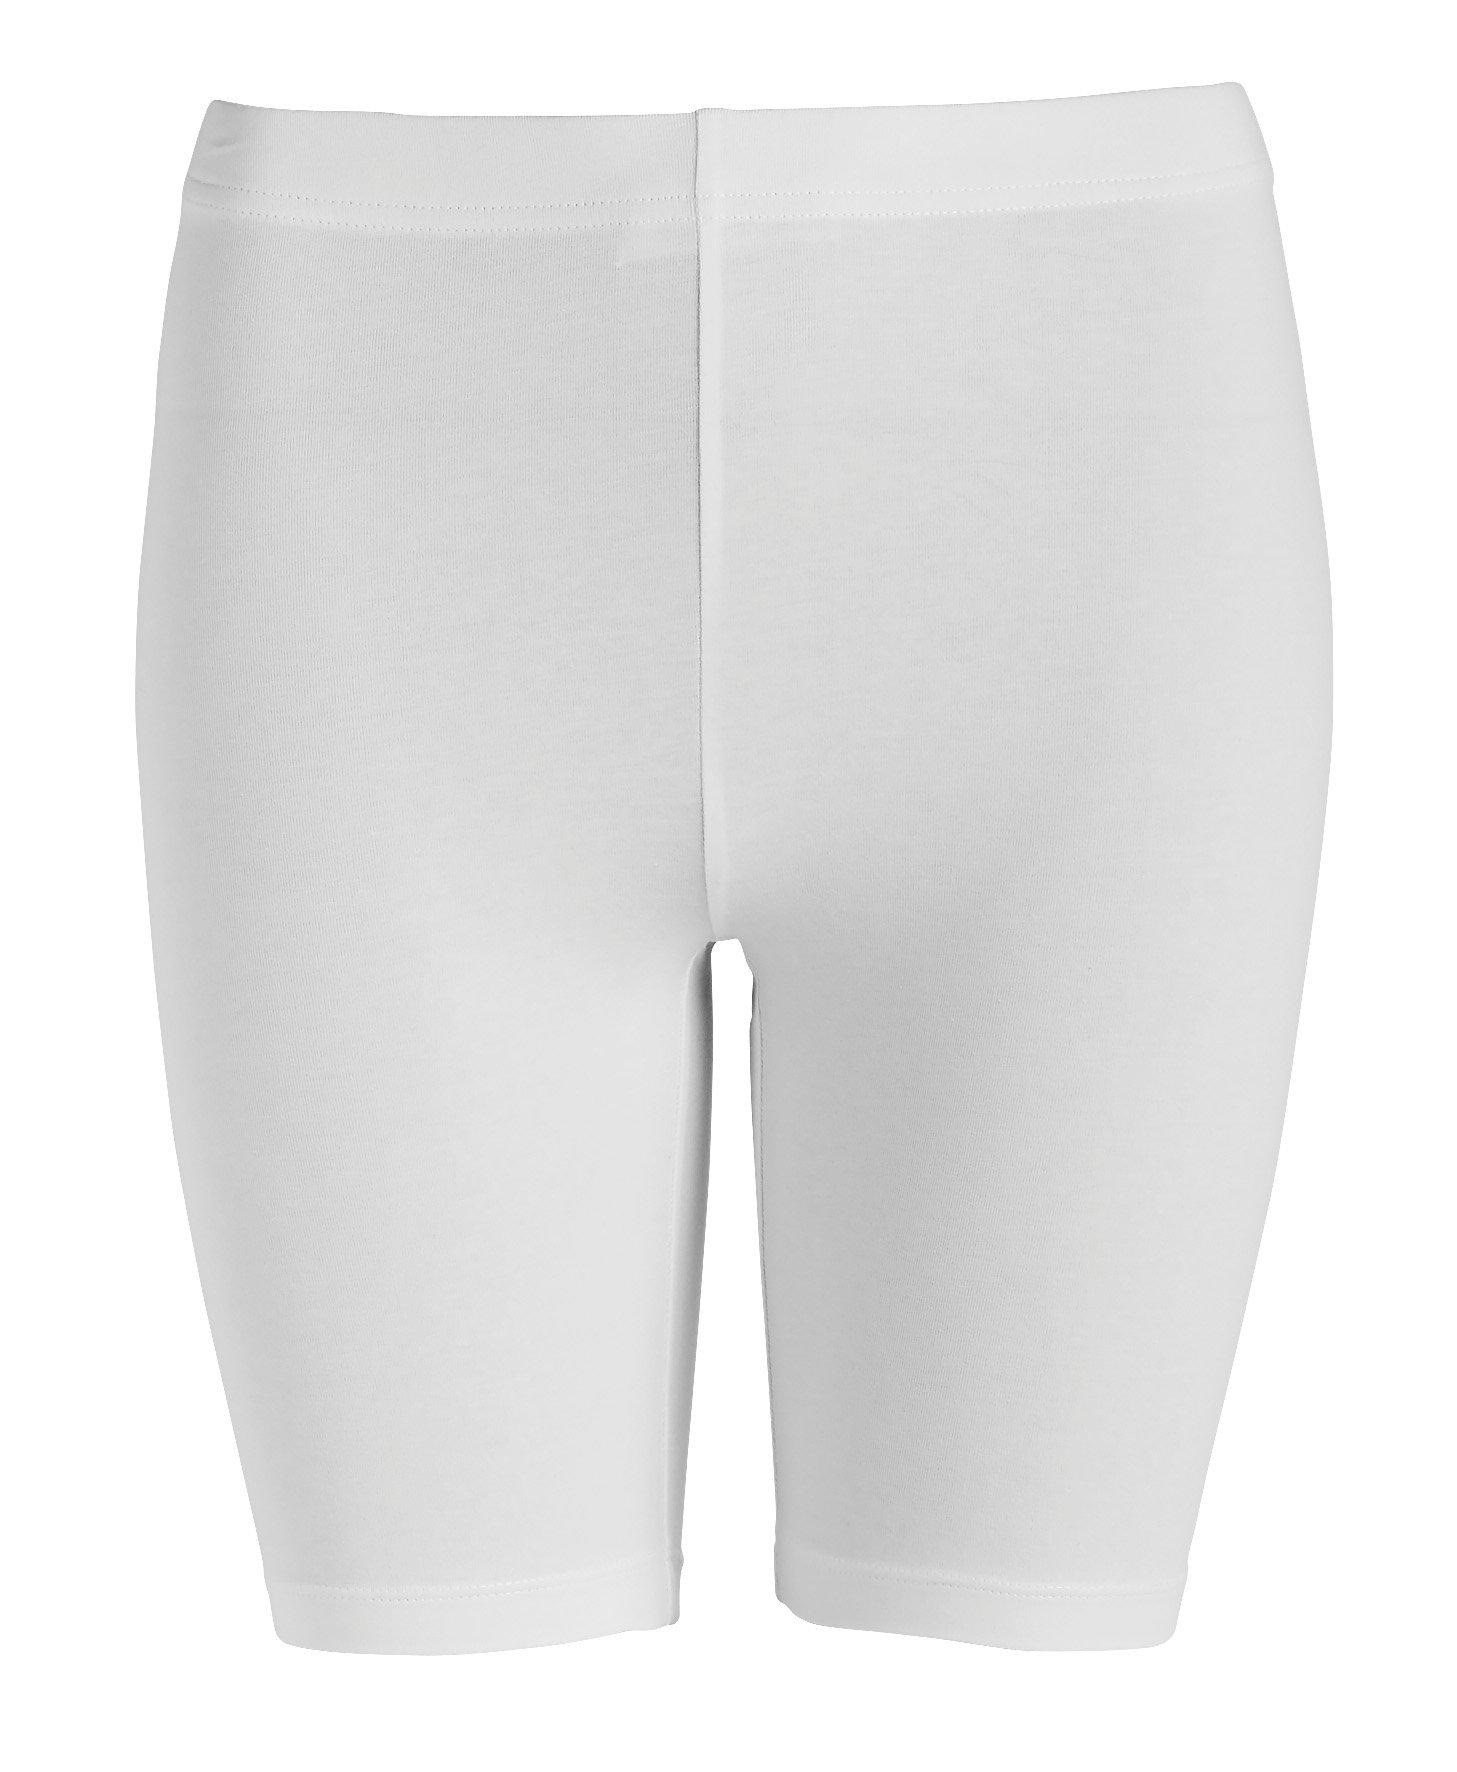 white bicycle shorts